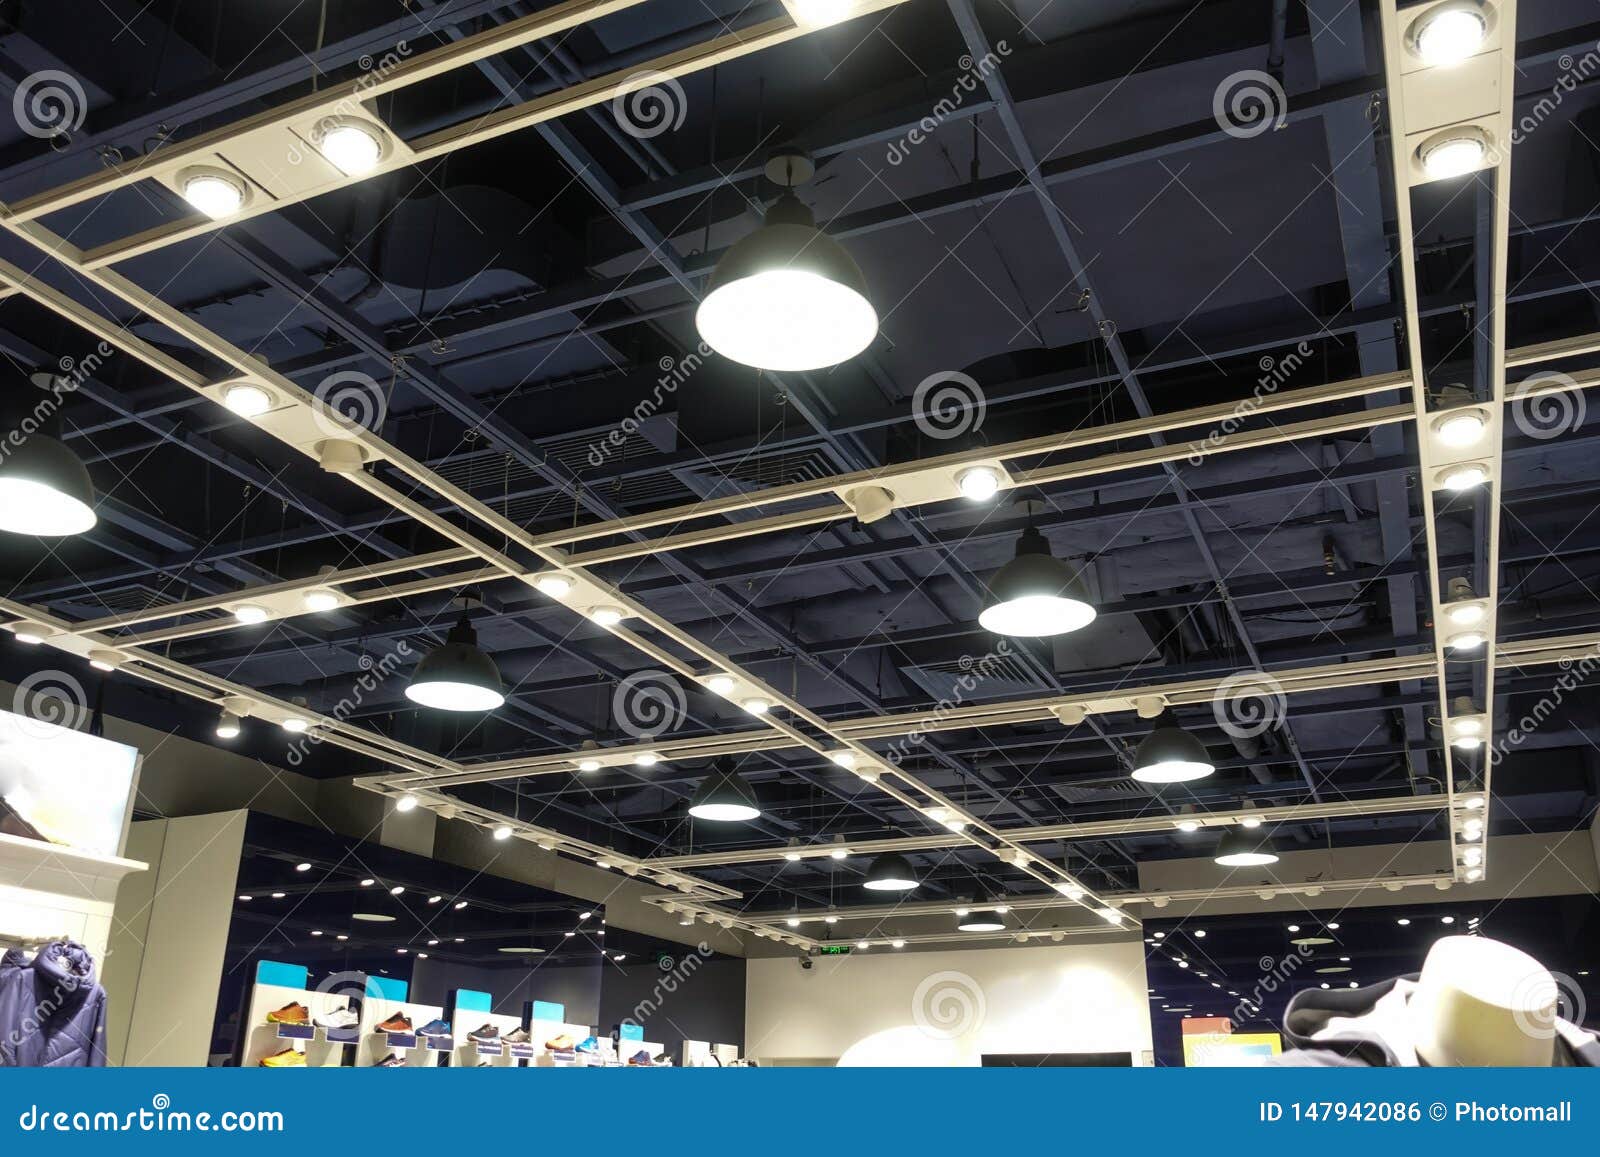 Led Light On Shop Ceiling In Modern Commercial Building